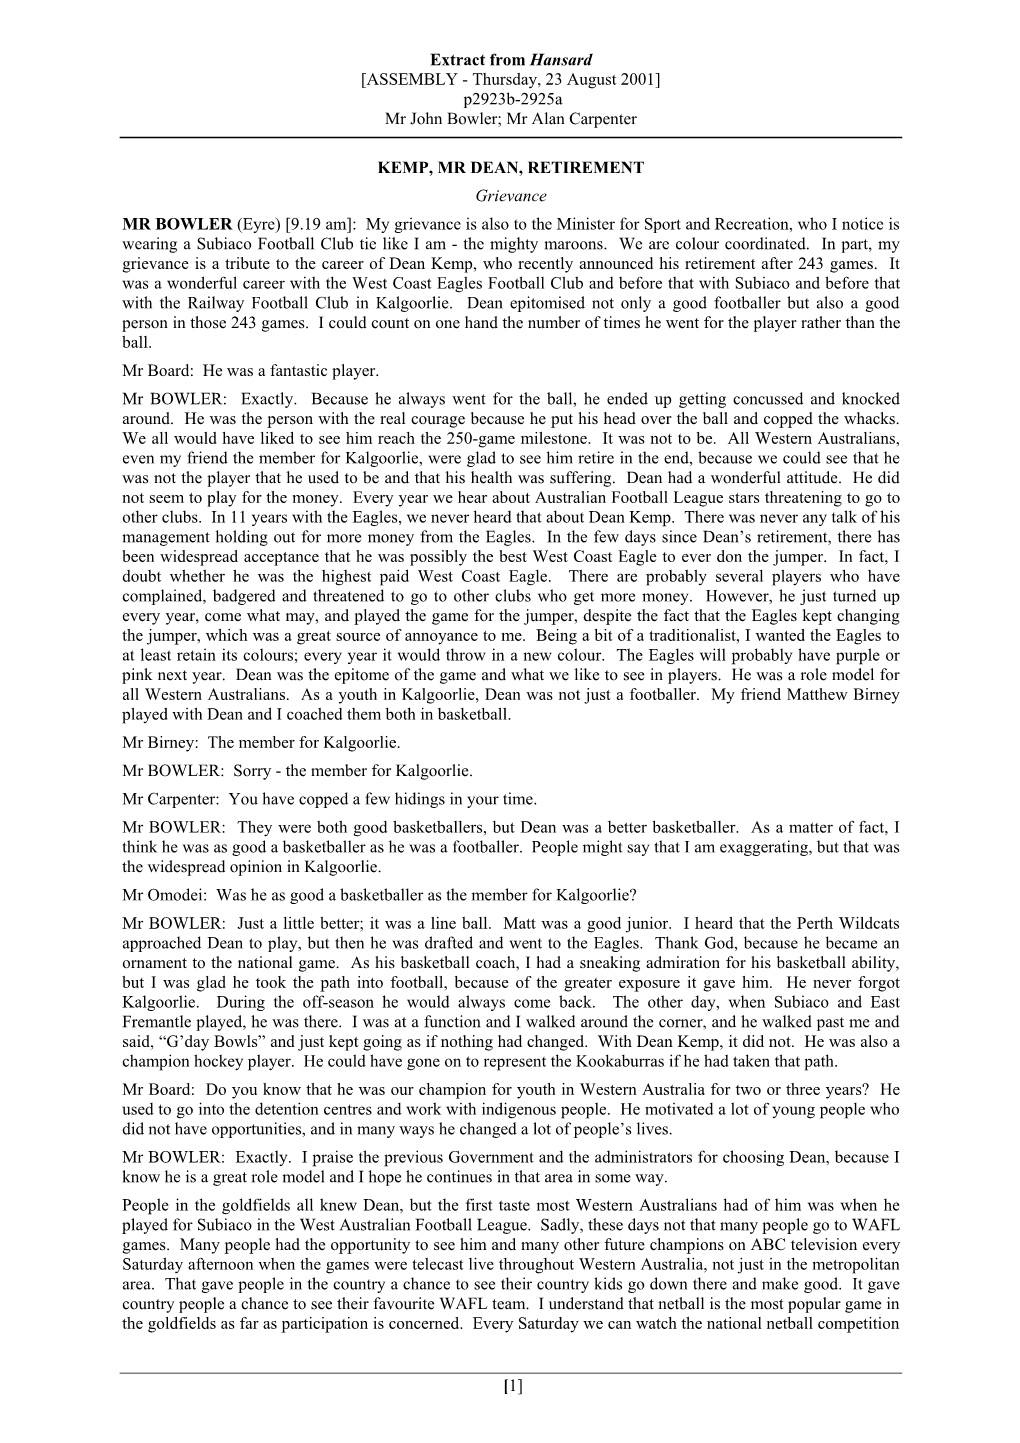 Extract from Hansard [ASSEMBLY - Thursday, 23 August 2001] P2923b-2925A Mr John Bowler; Mr Alan Carpenter